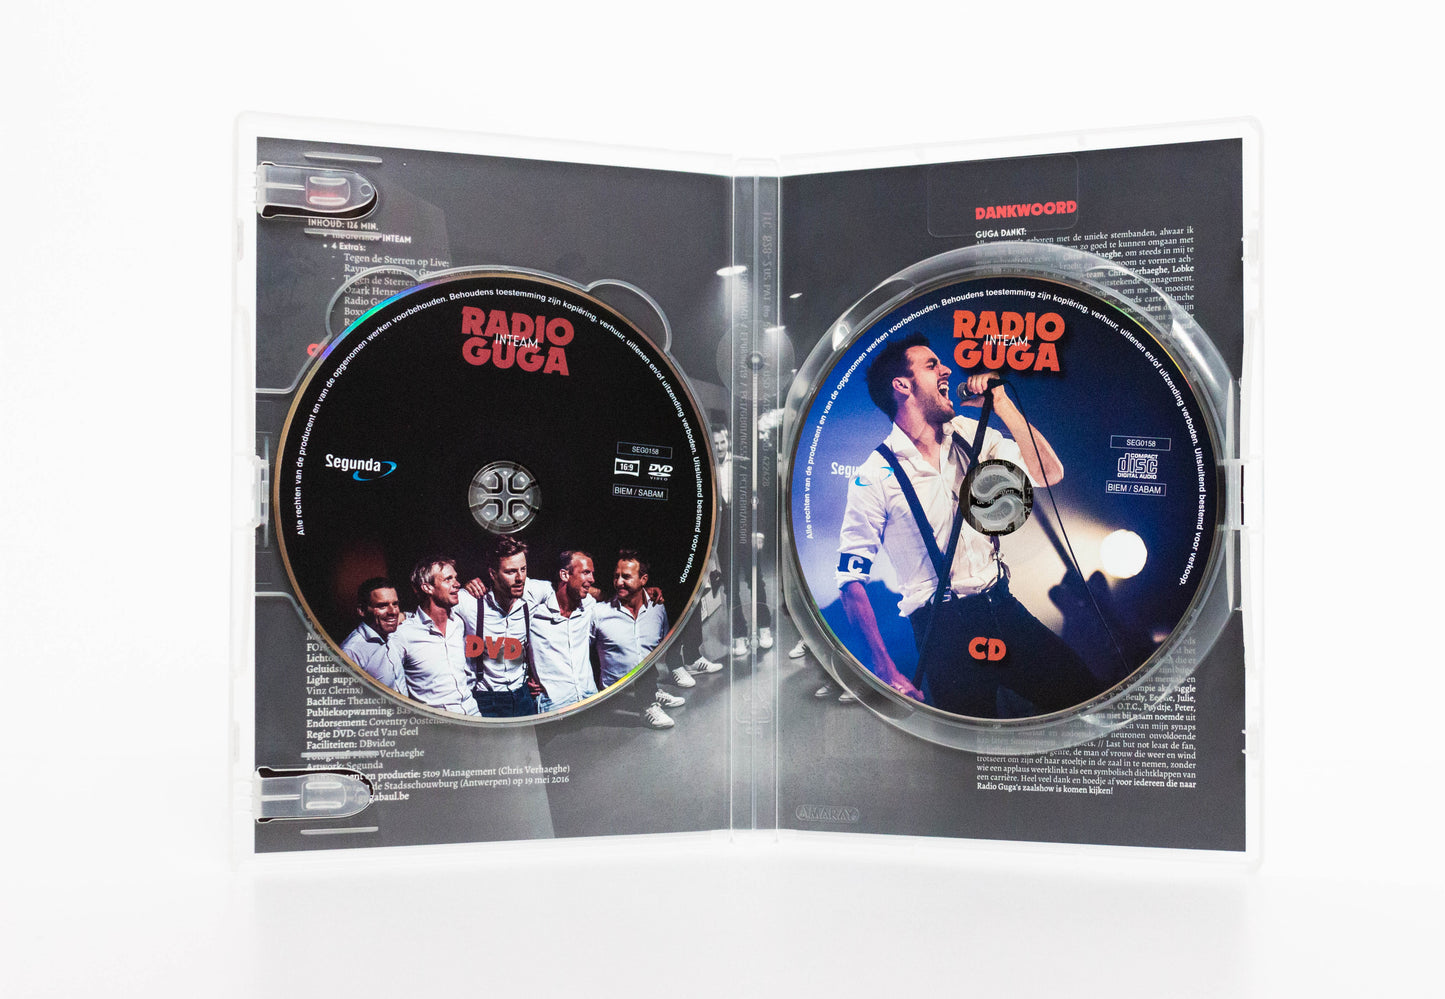 Radio Guga - "INTEAM" (DVD+CD)